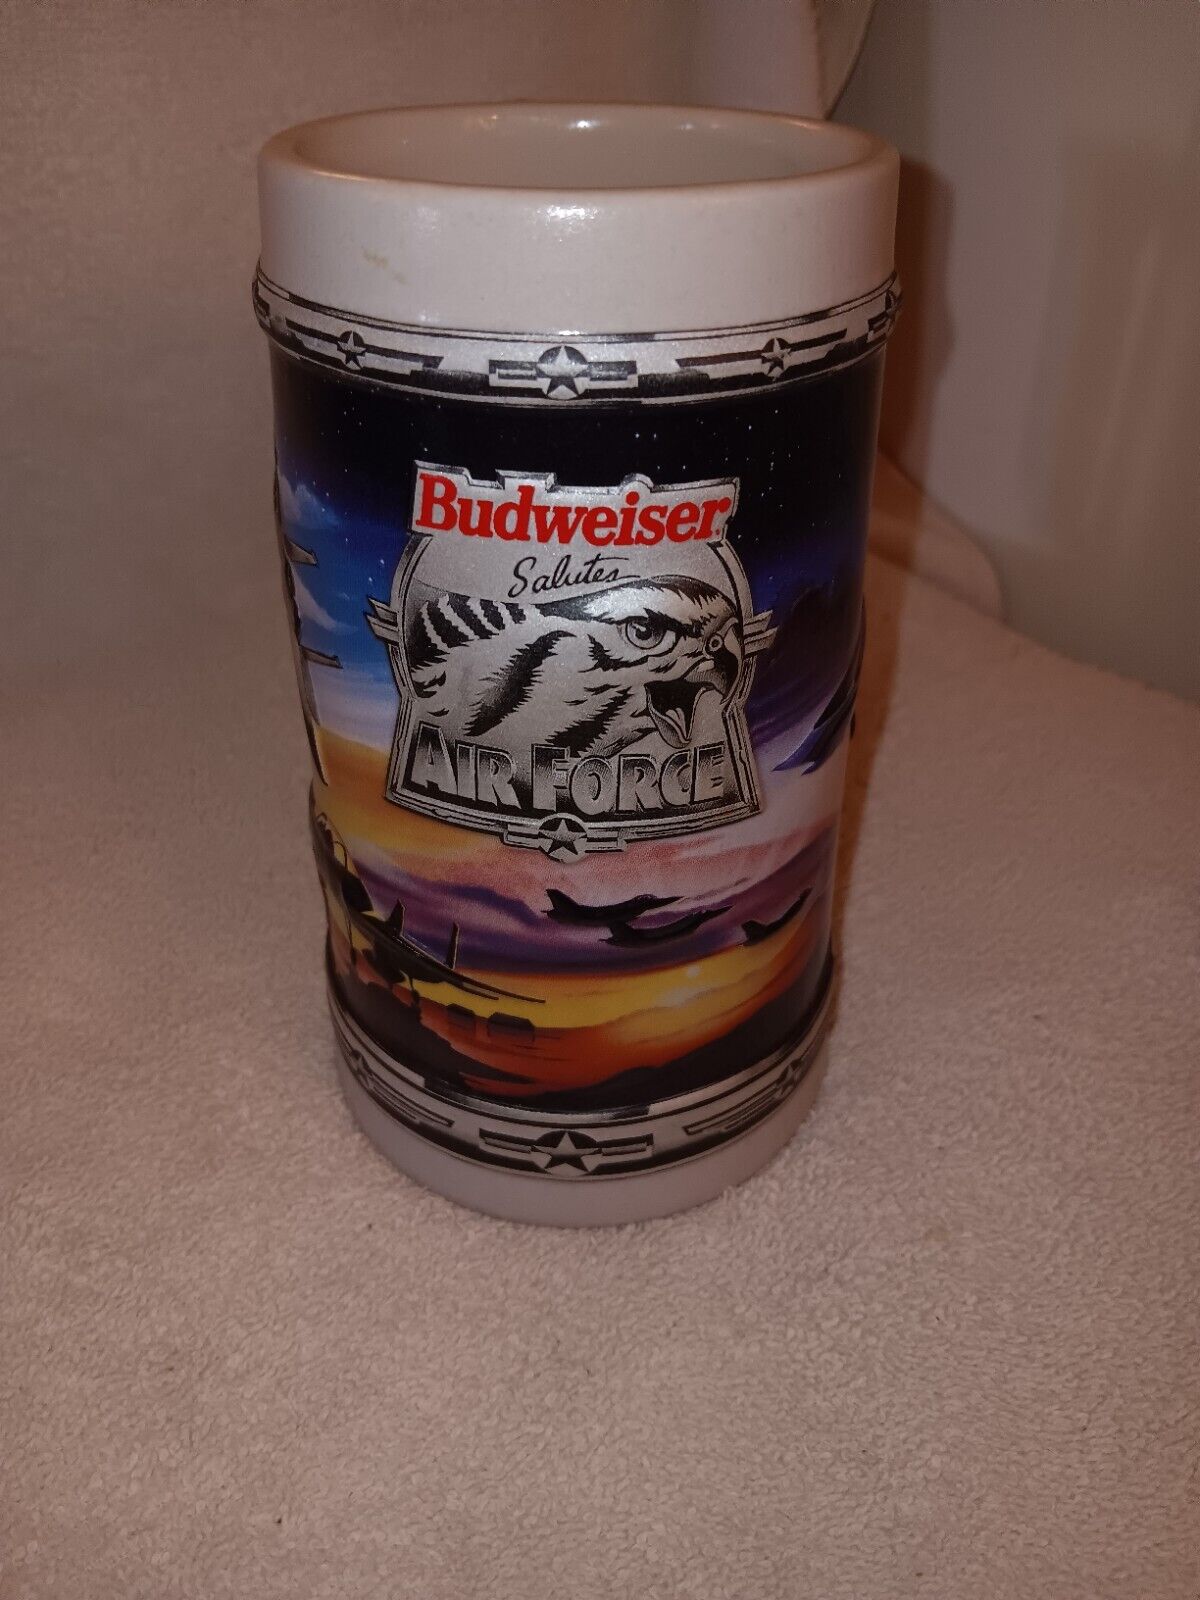 1993 Budweiser Military Series Salutes Air Force Beer Stein Mug